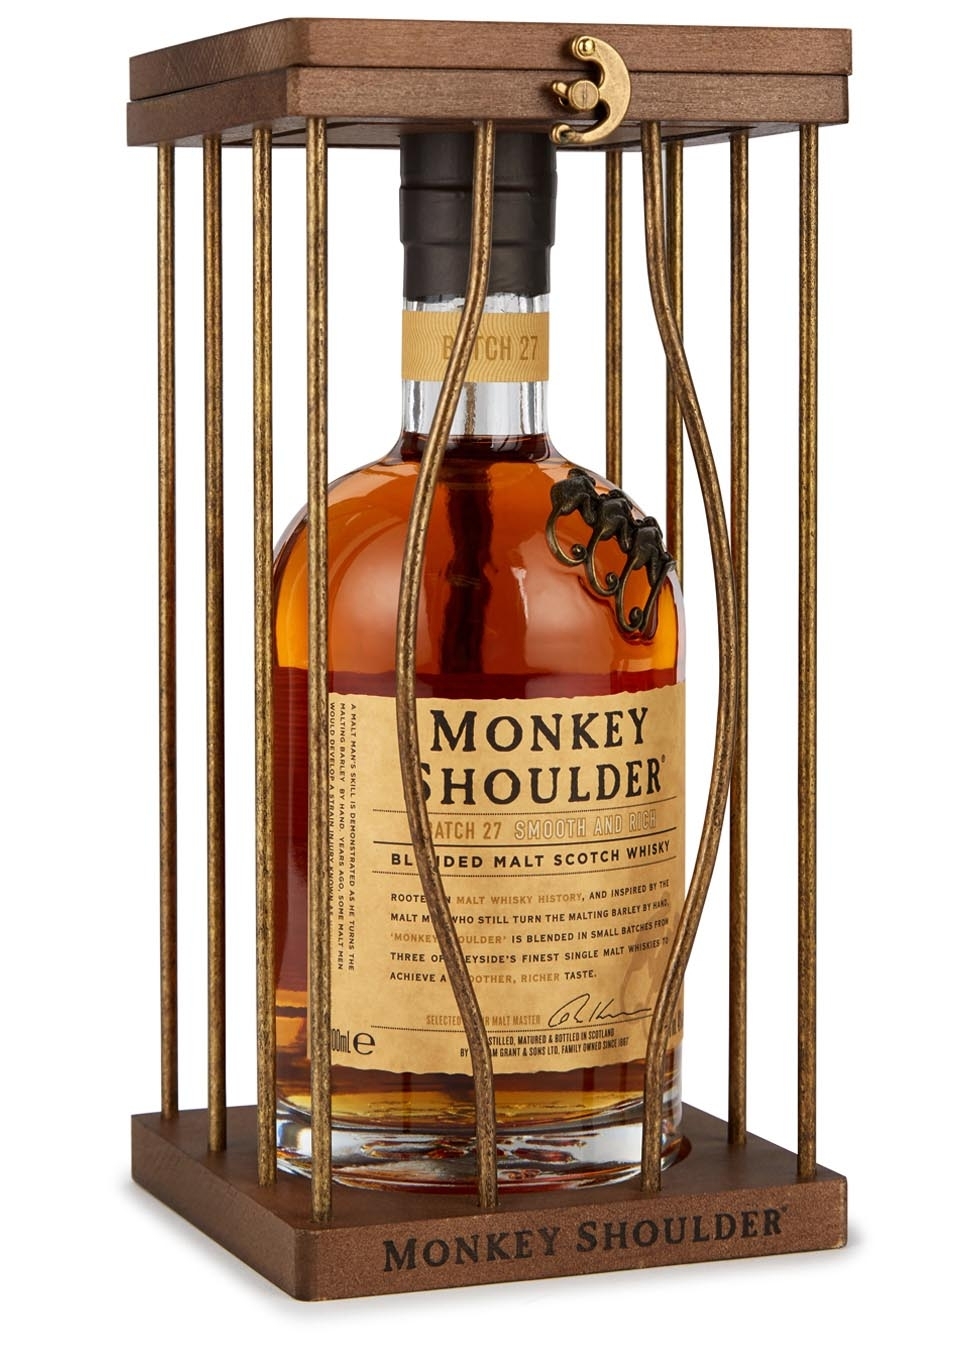 best price for monkey shoulder whiskey